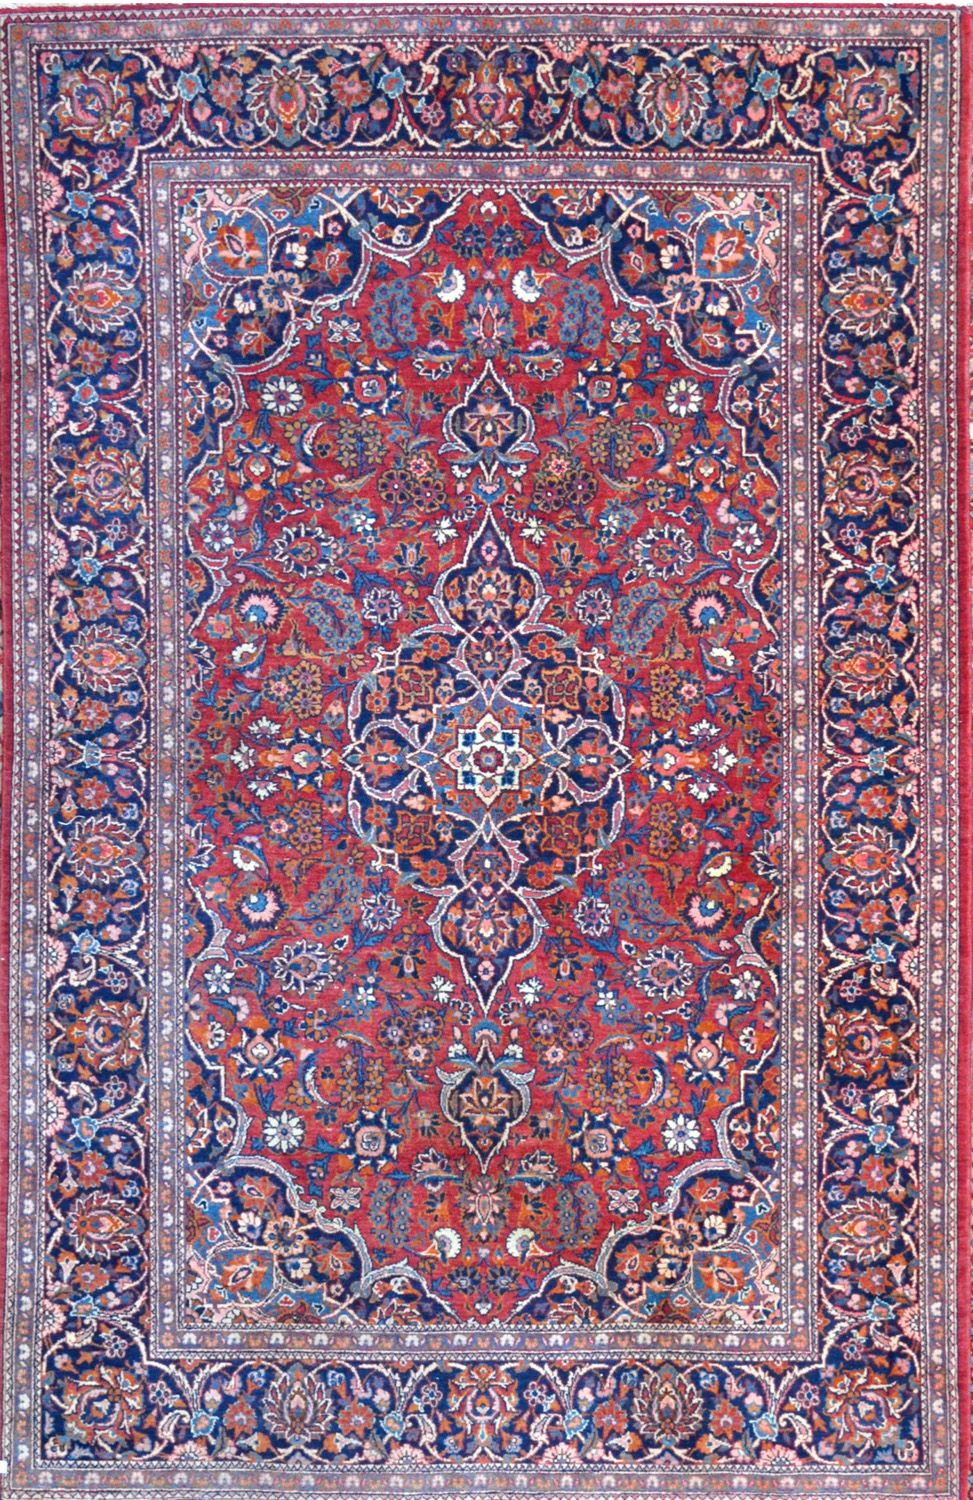 Null 精美而古老的卡赞科克

伊朗

20世纪中叶

尺寸 210 x 135 cm

技术特点

棉质底座上的Kork优质羊羔毛绒

密度。每平方米约75&hellip;